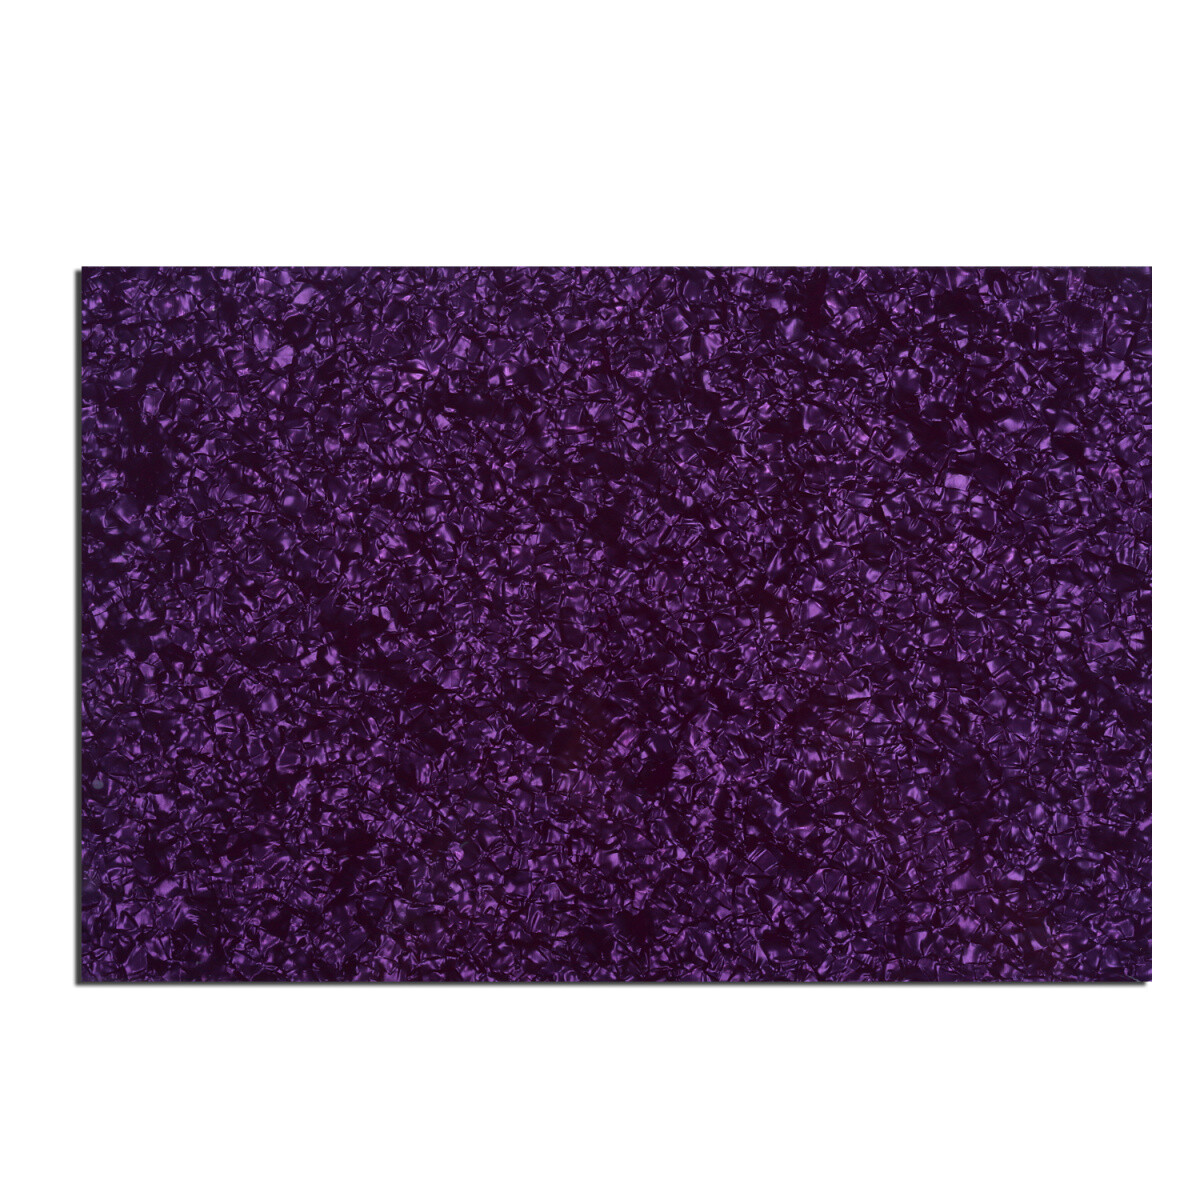 Brio Pickguard Blanks 12" x 17" 4 Ply Pearloid Purple